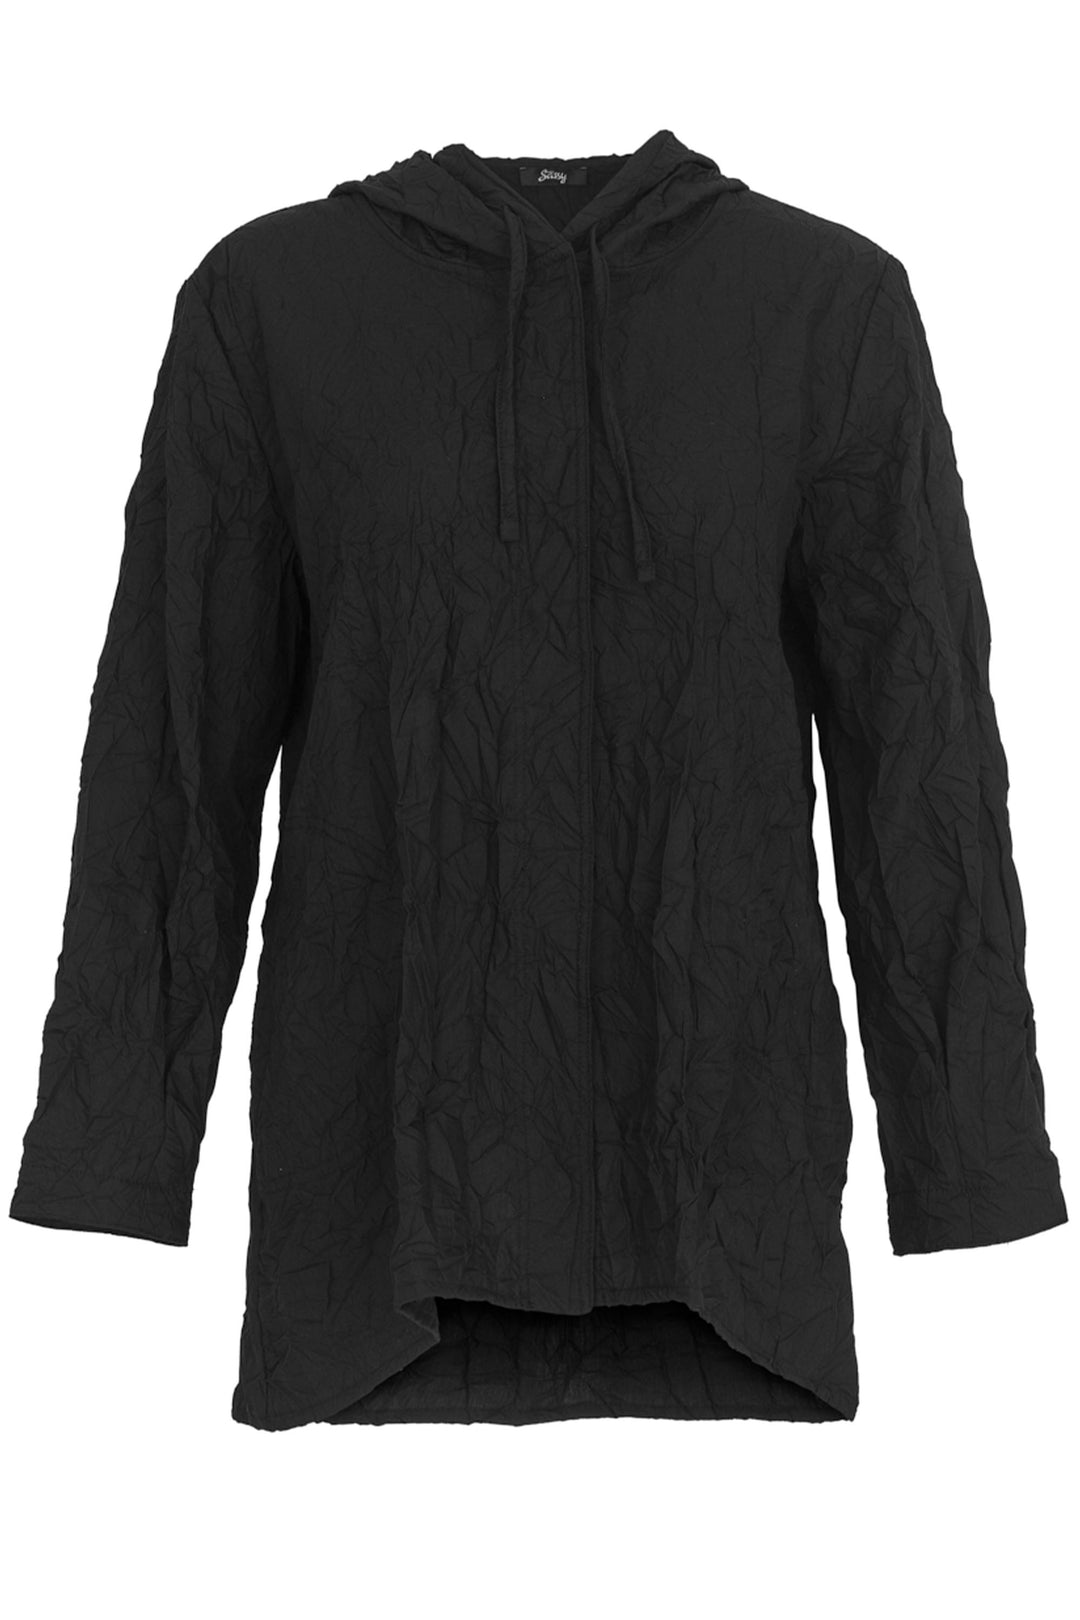 Ever Sassy Spring 2024 hoodie jacket, crinkle texture, drawstring hood with full length sleeves 